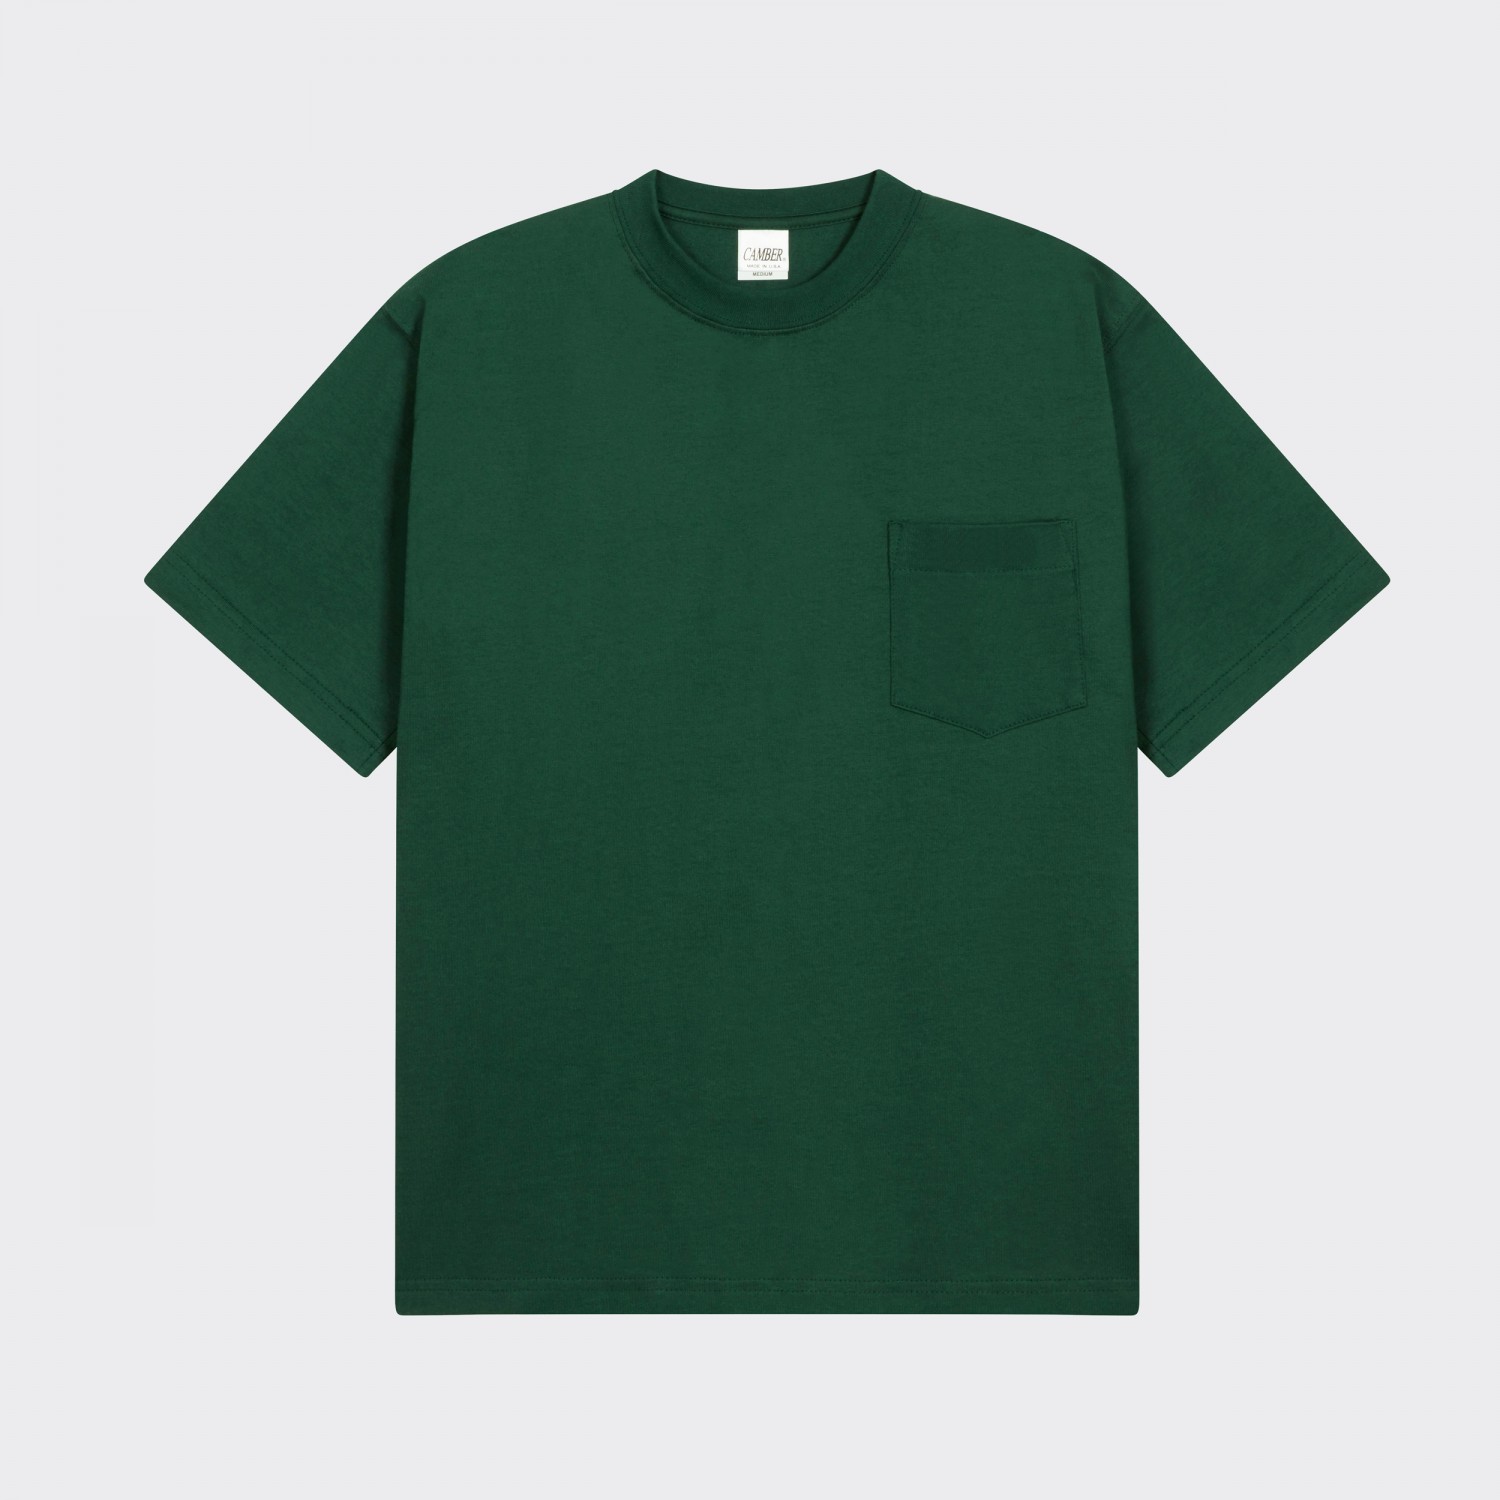 Camber USA : Pocket T-shirt : Dartmouth Green